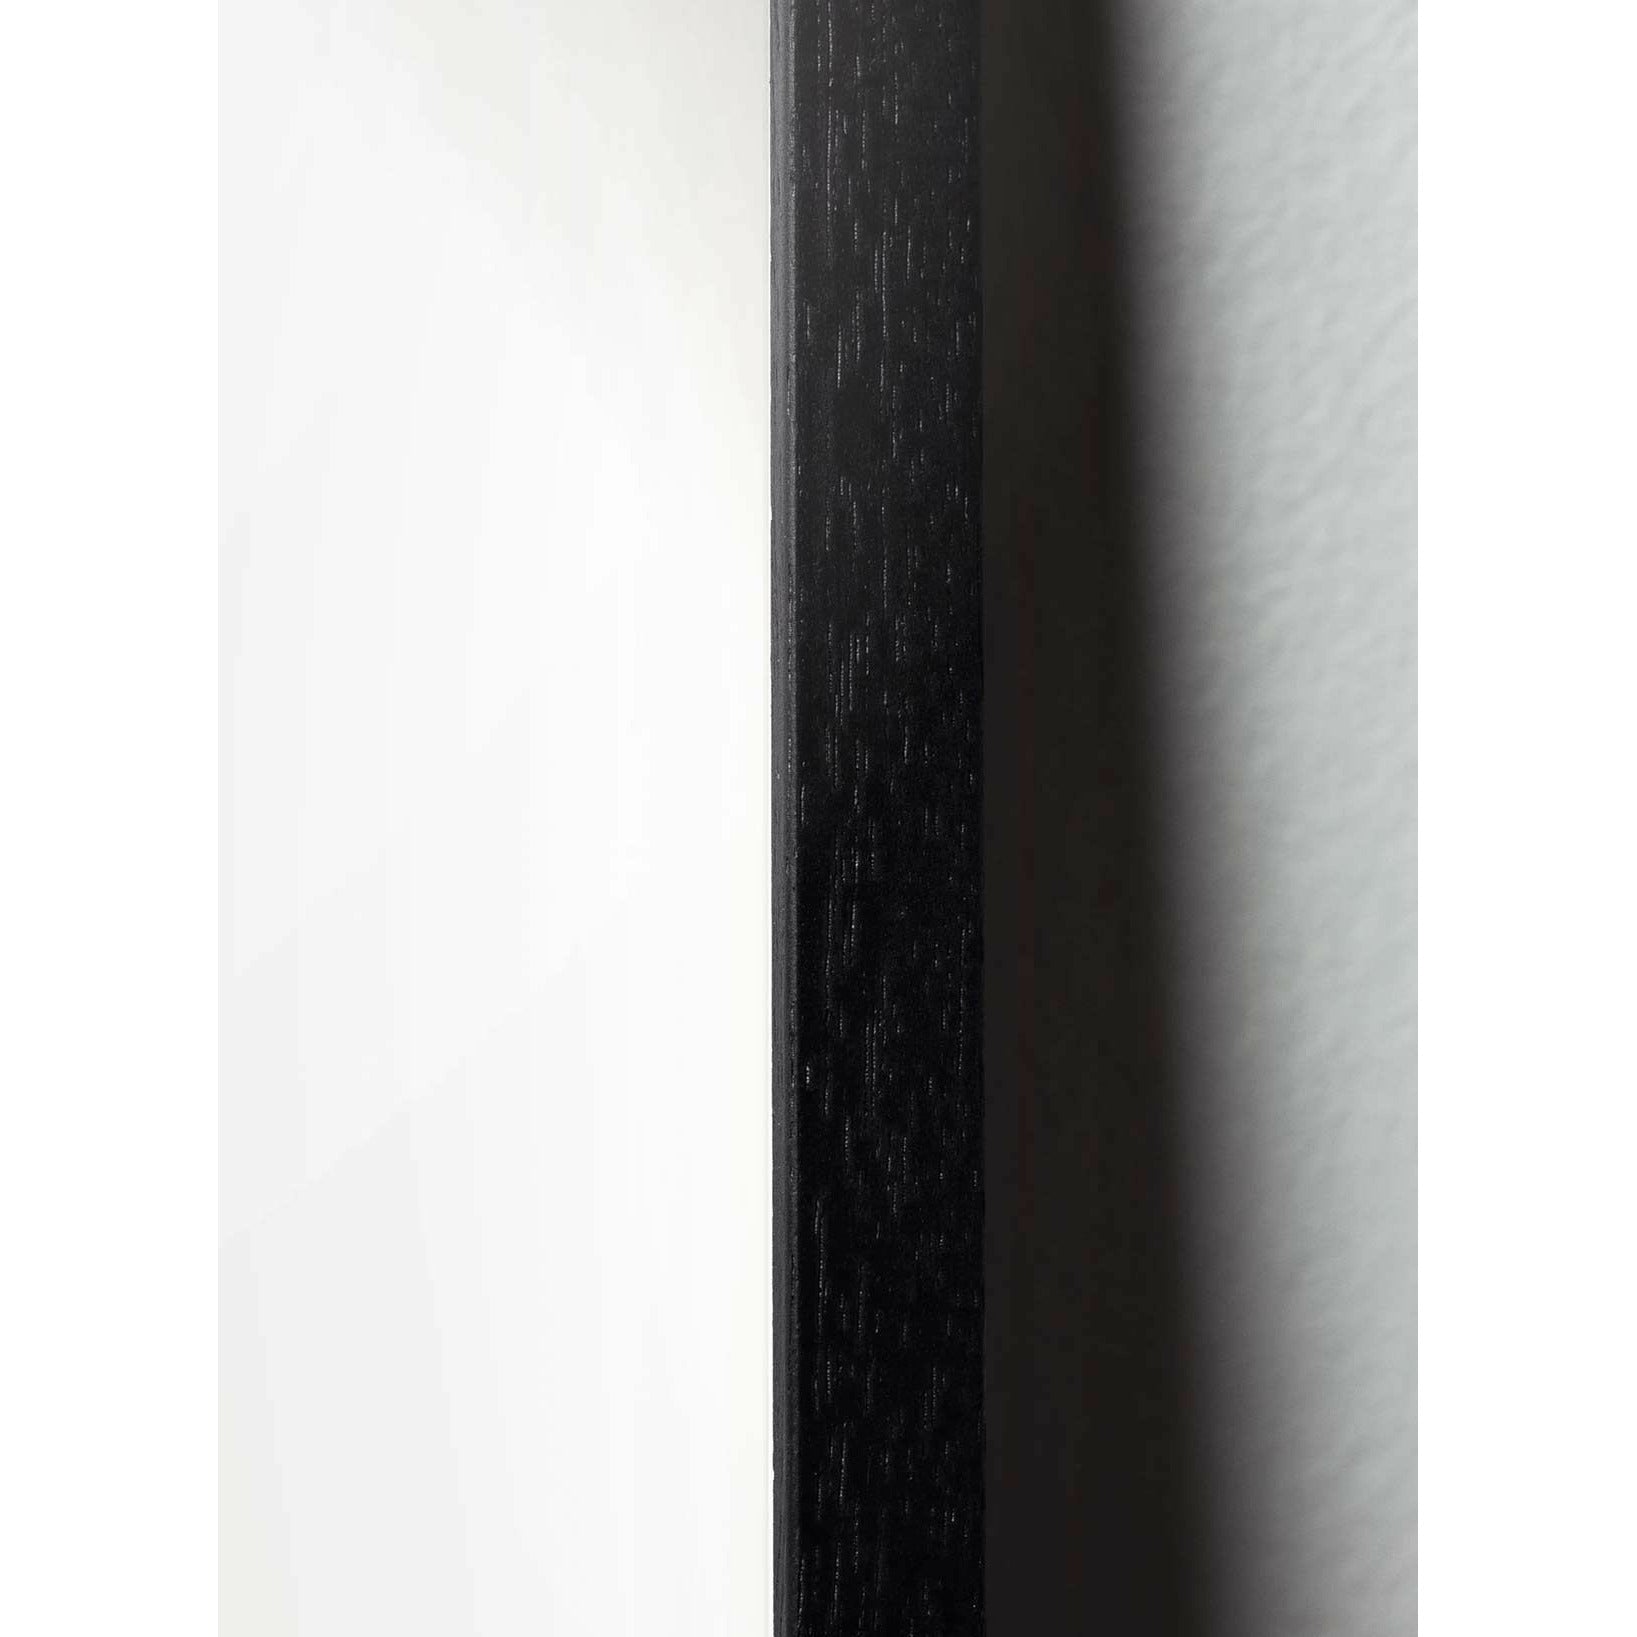 Brainchild Egg Cross Format Poster, Frame In Black Lacquered Wood 50x70 Cm, Brown